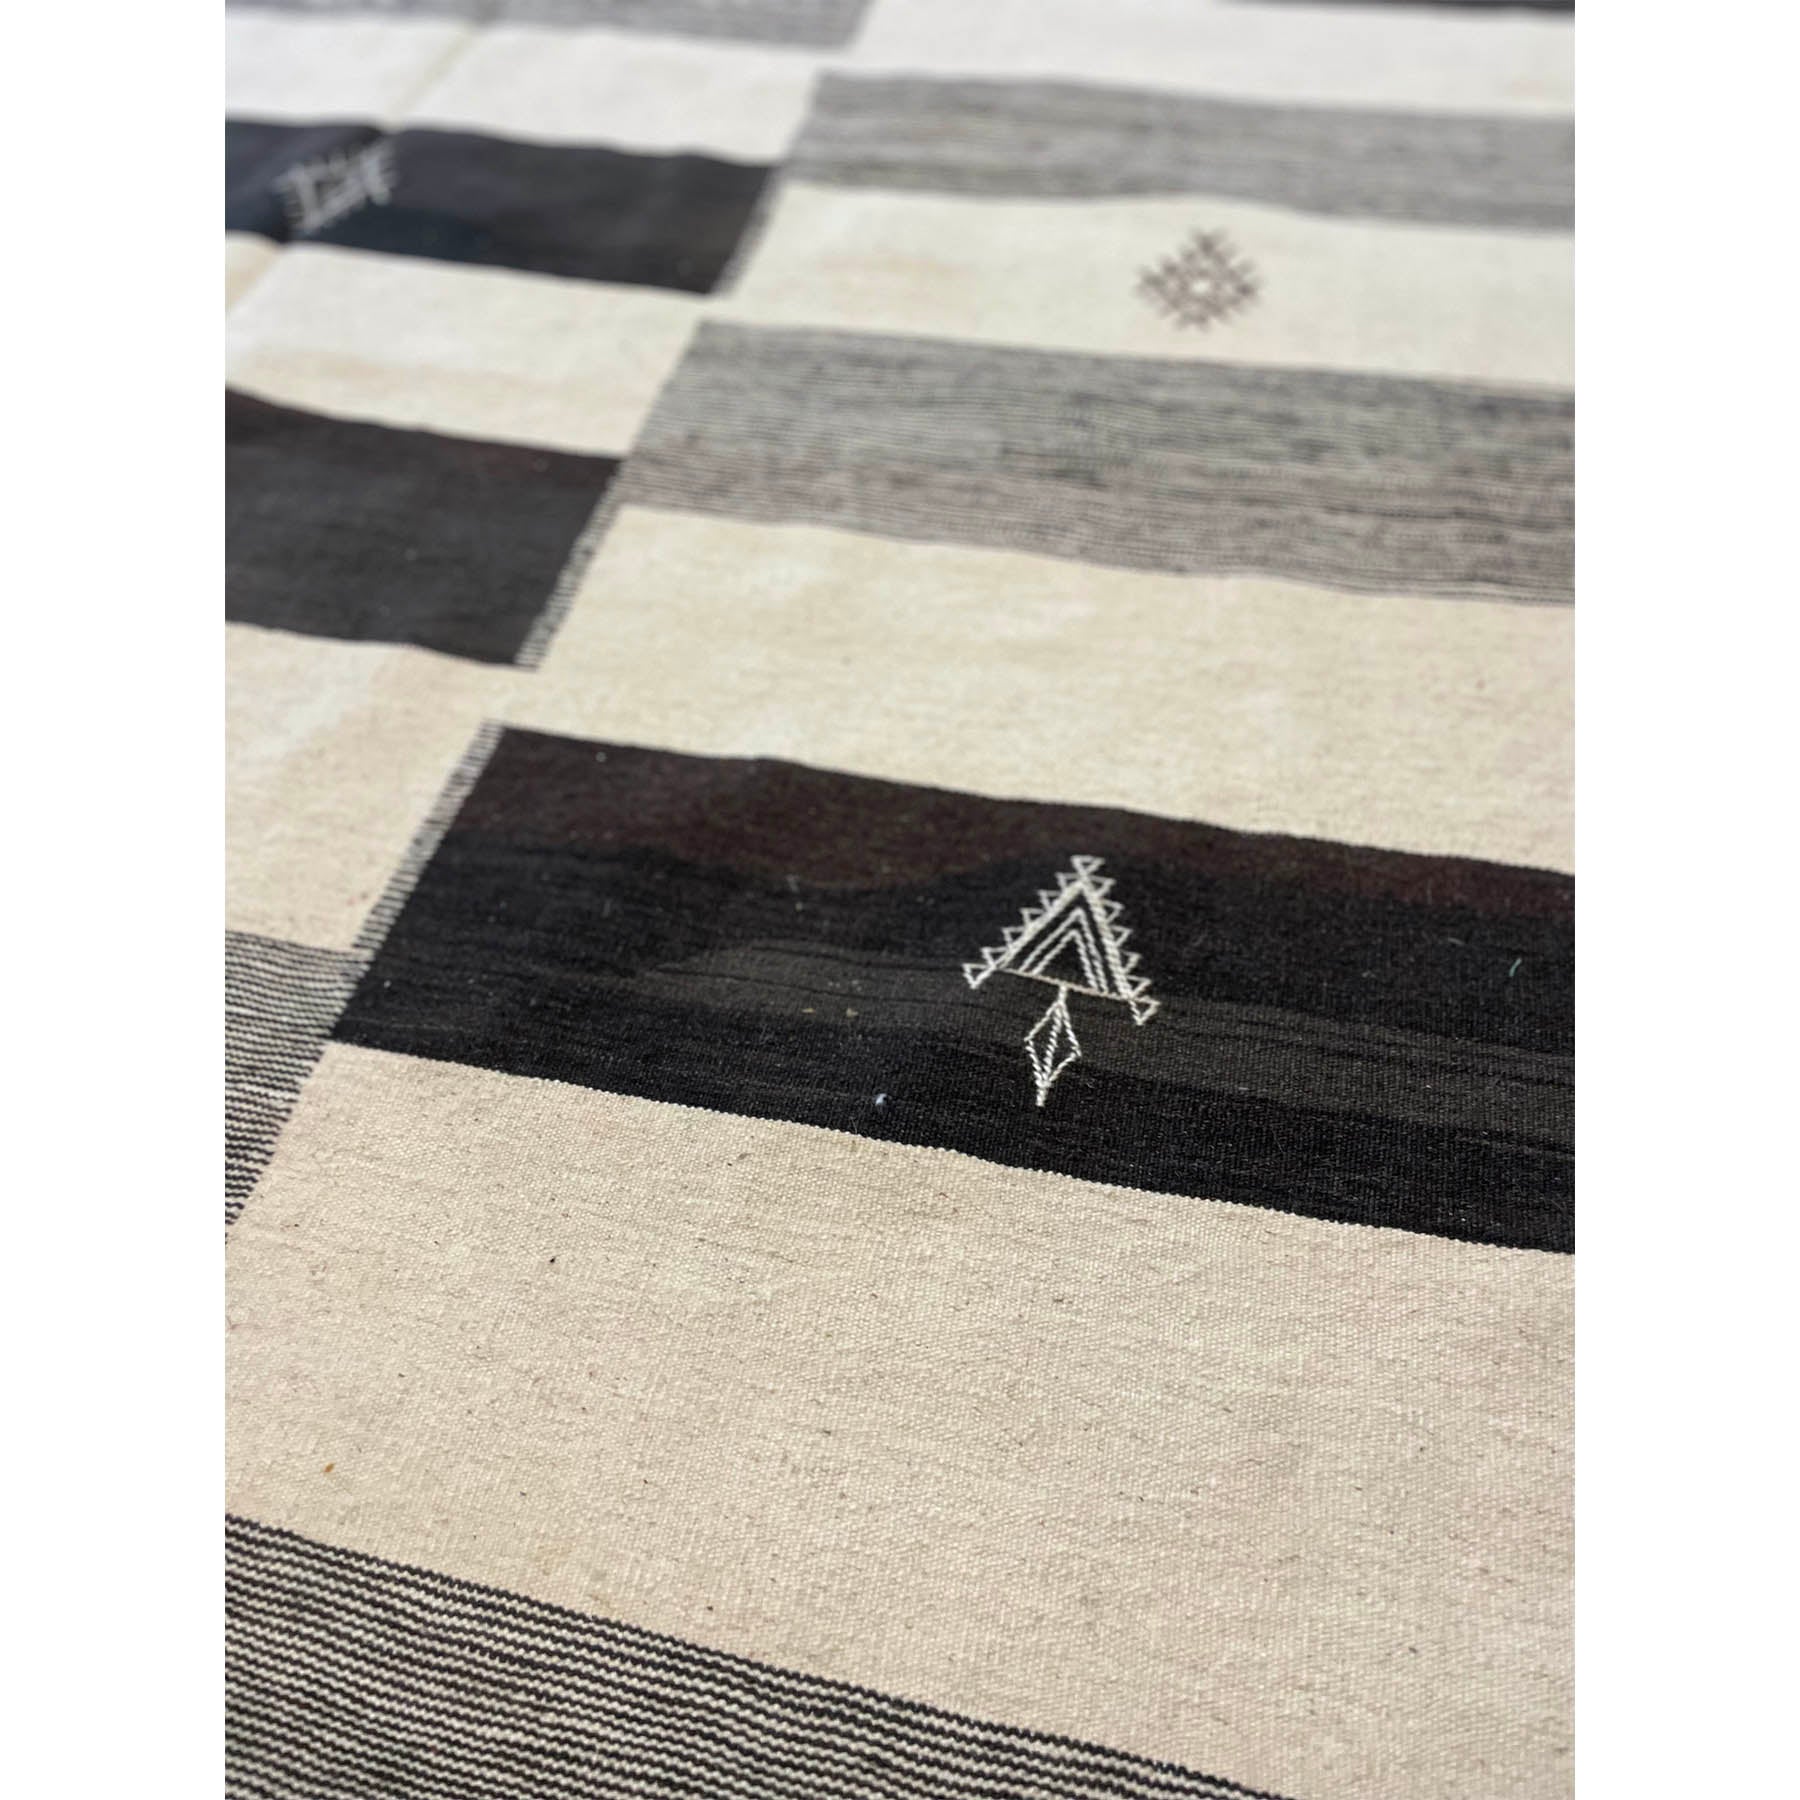 Handwoven white and gray Moroccan kilim area rug - Kantara | Moroccan Rugs